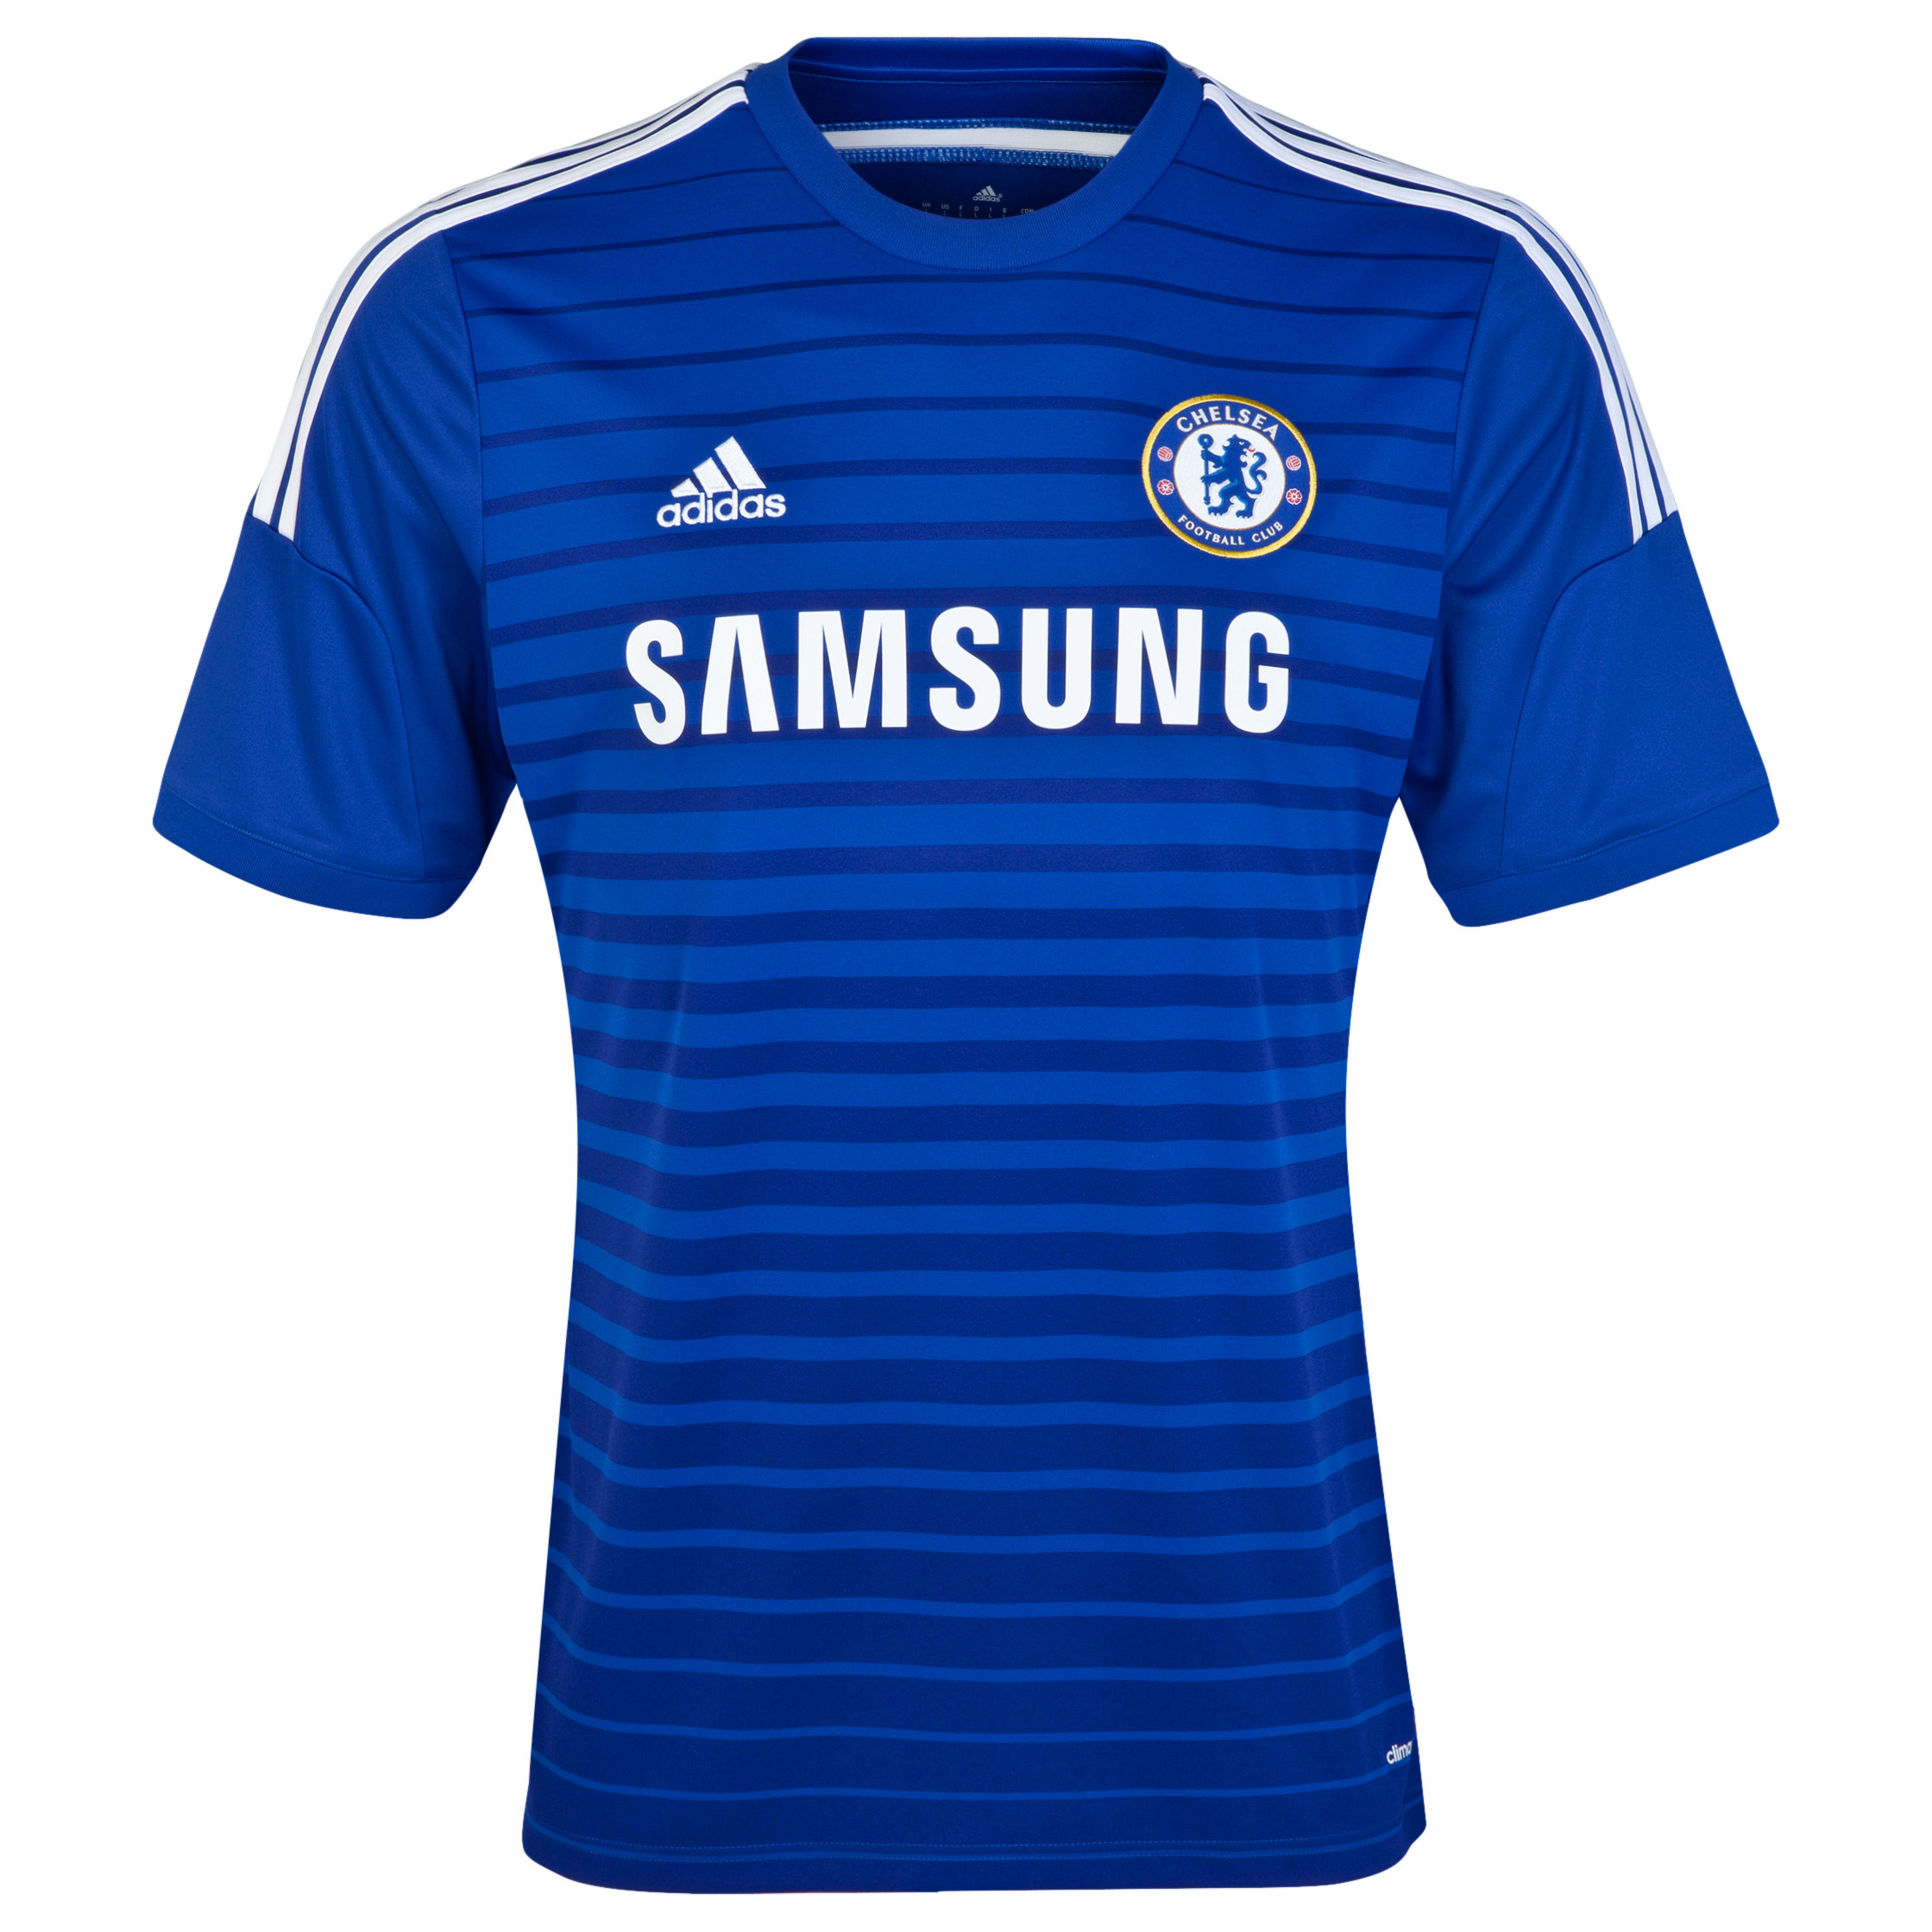 Chelsea shirt 2015 